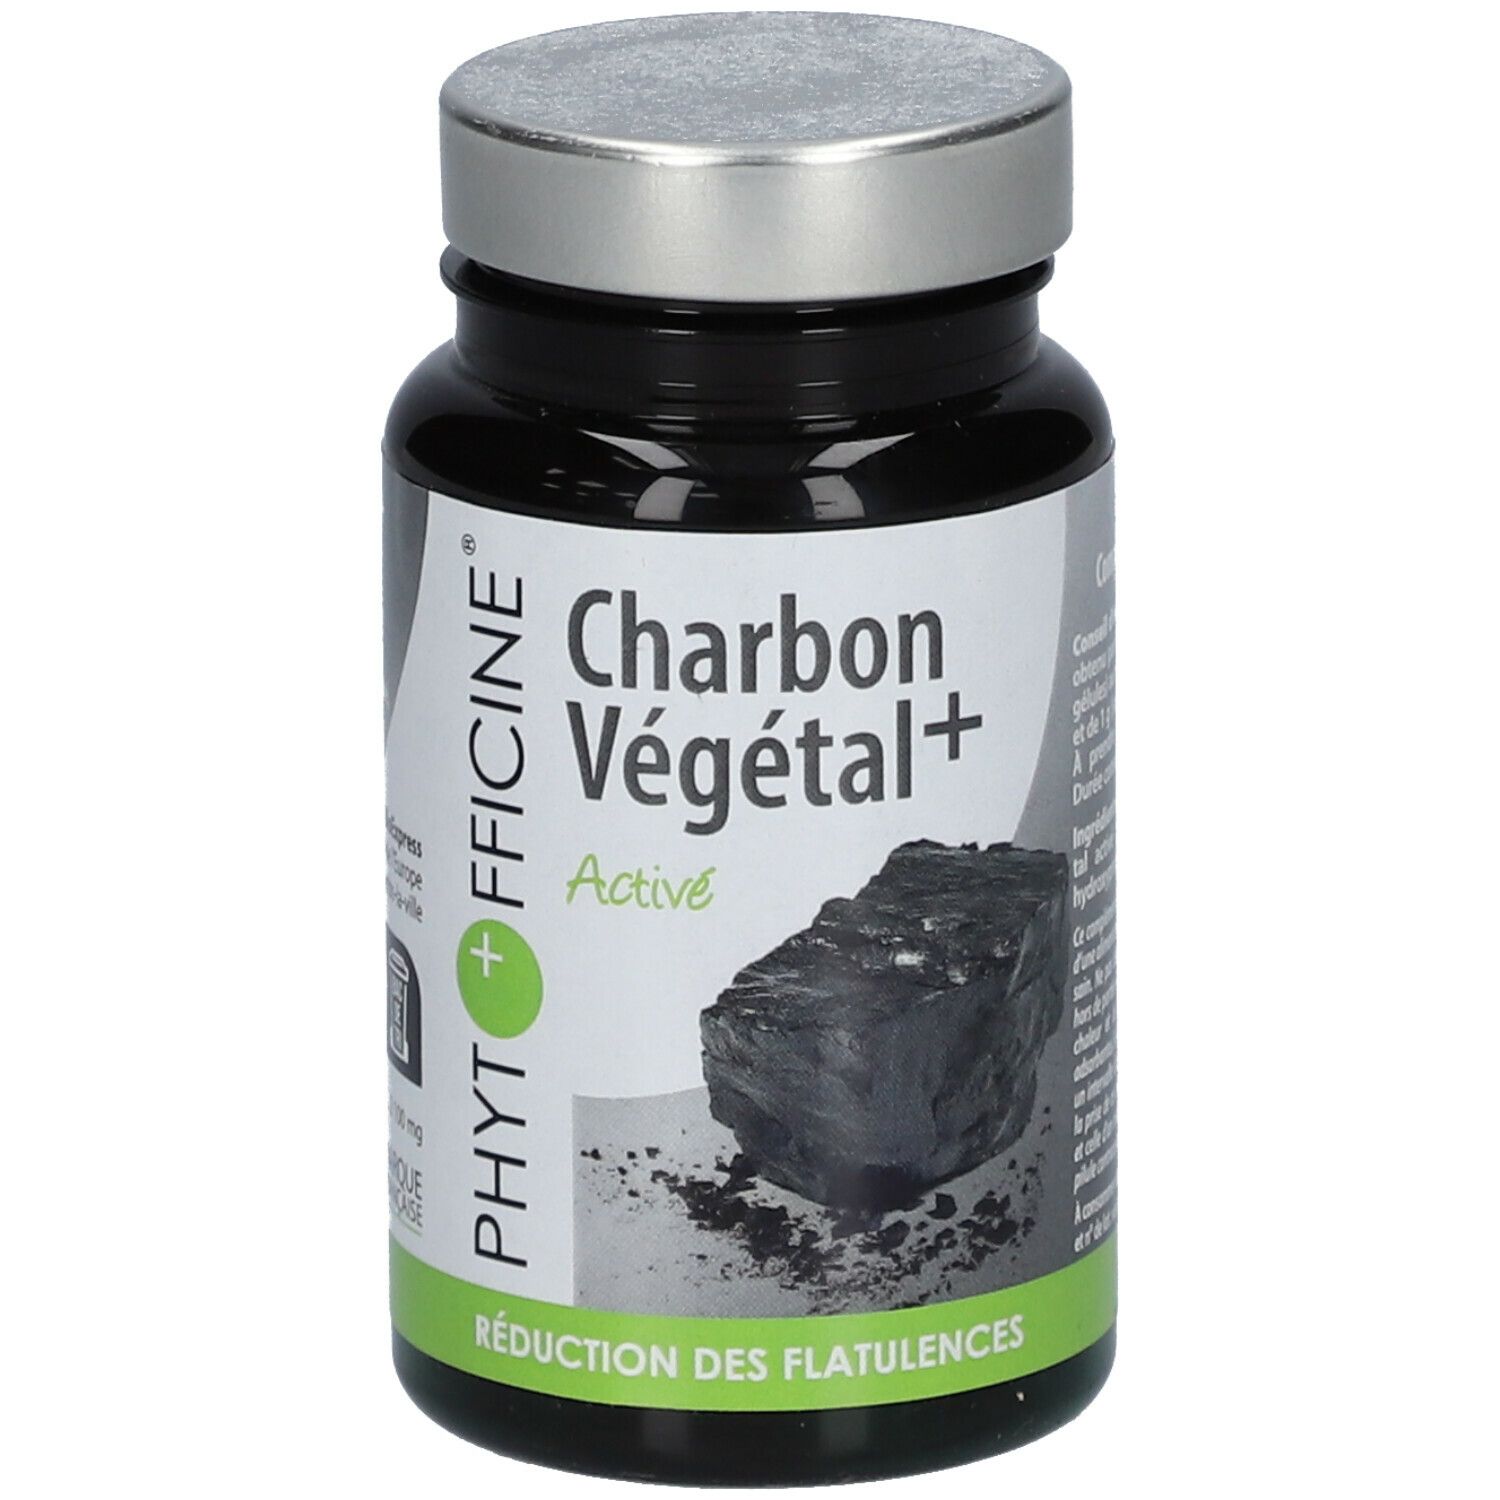 Phytofficine® Charbon Végétal d'origine végétale